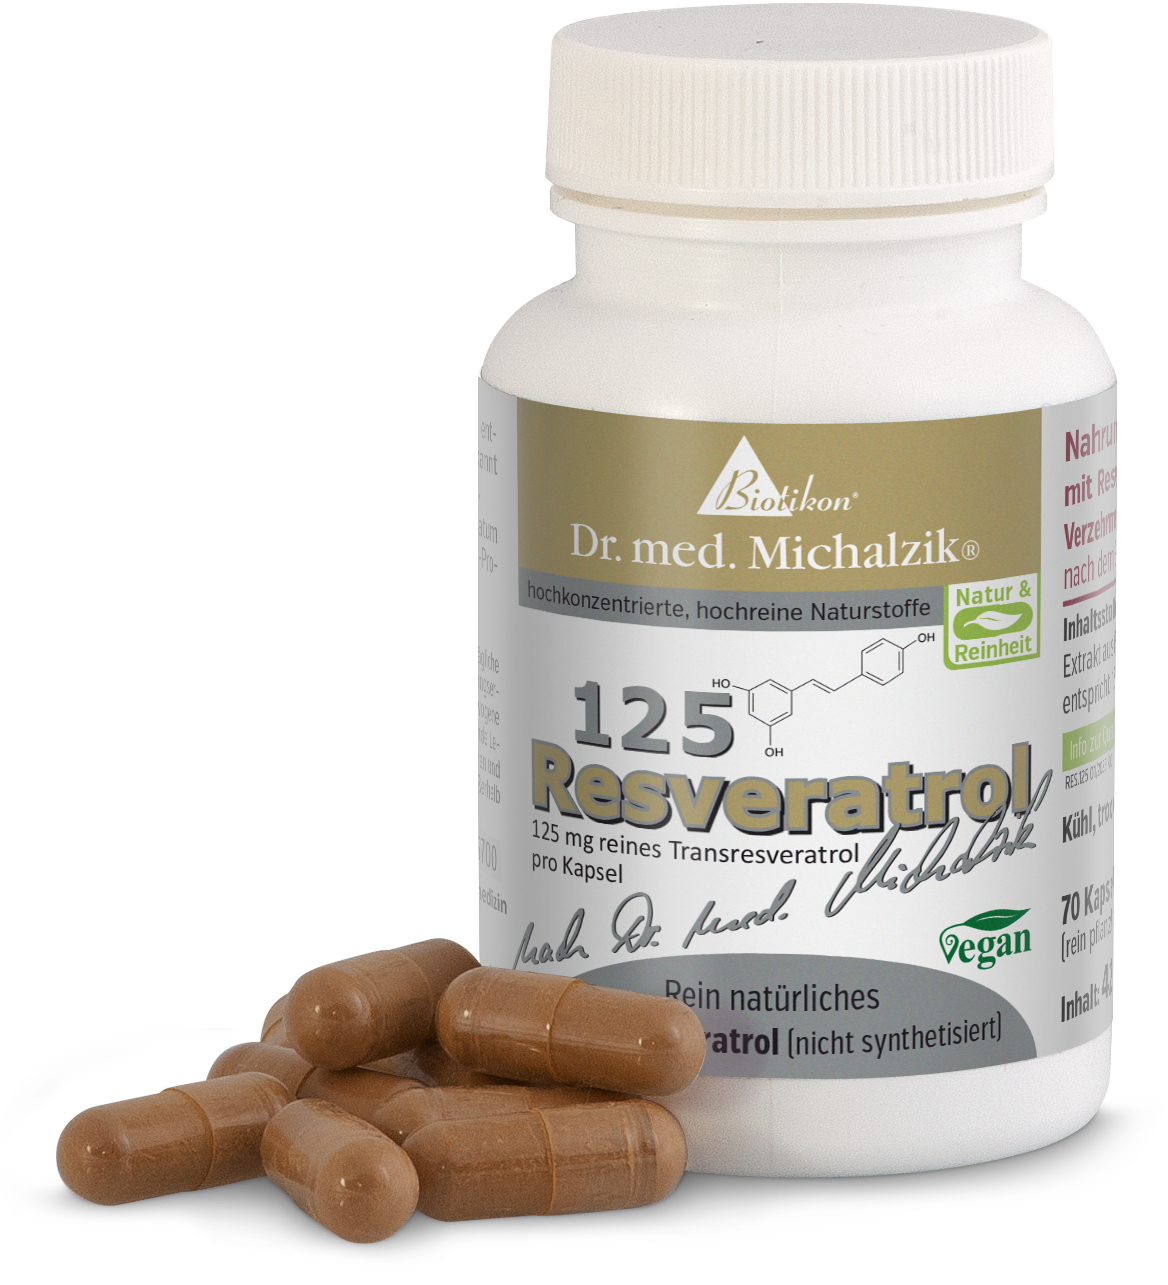 Resveratrol 125